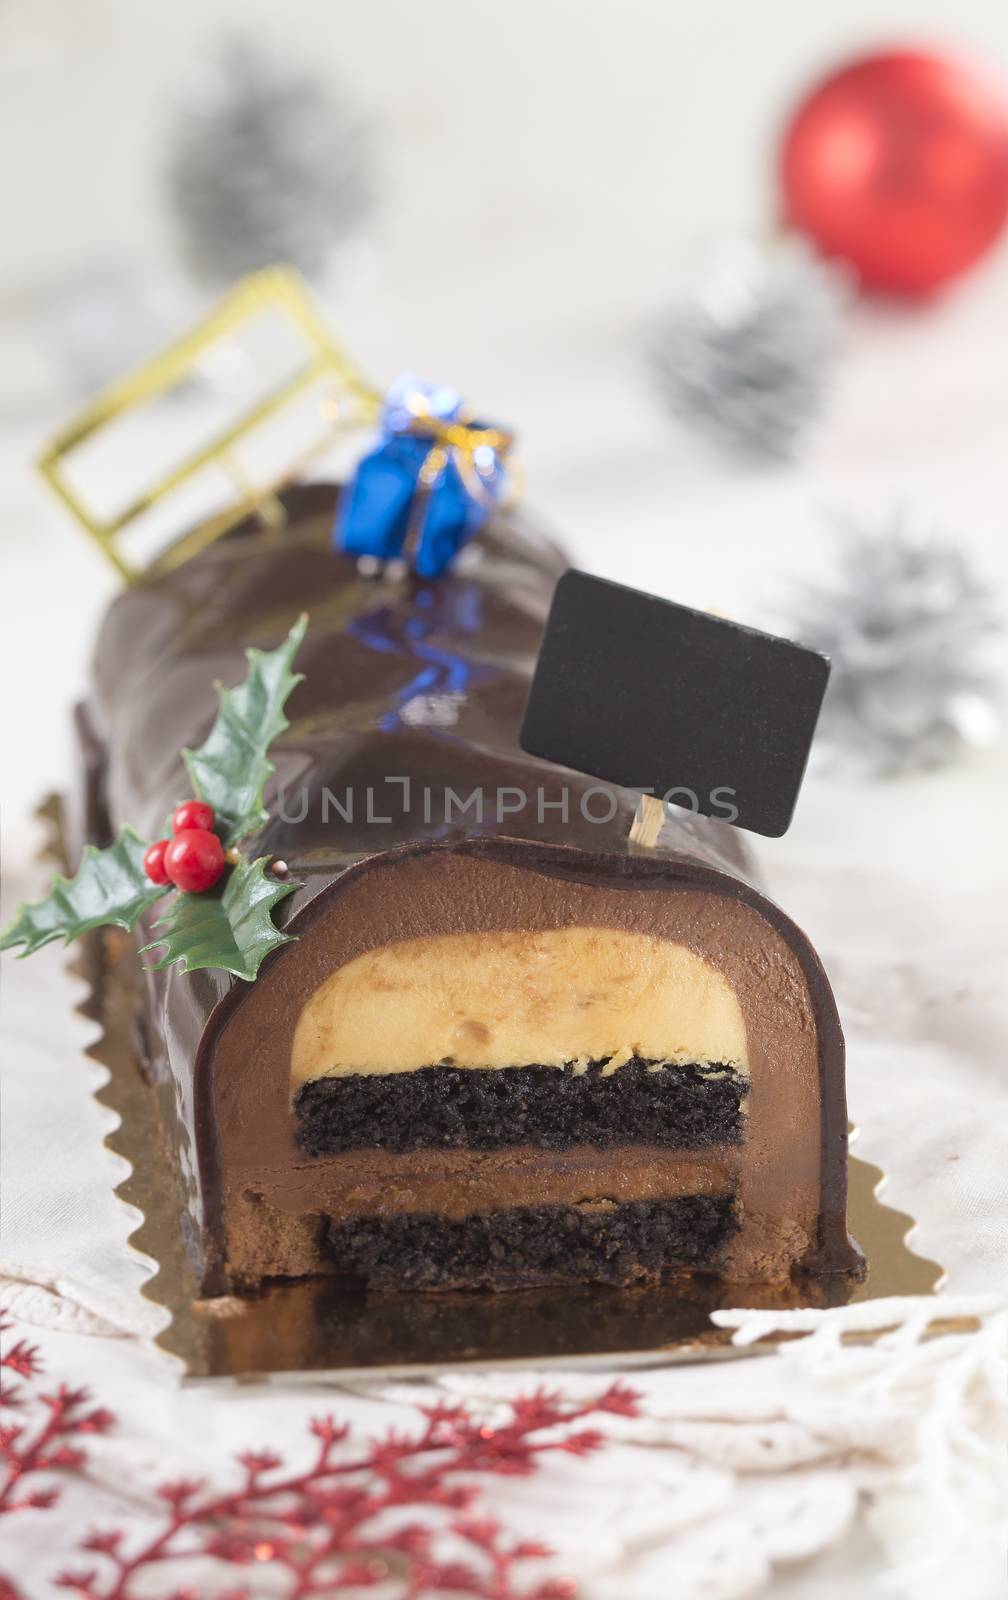 Christmas chocolate yule log cake by JPC-PROD